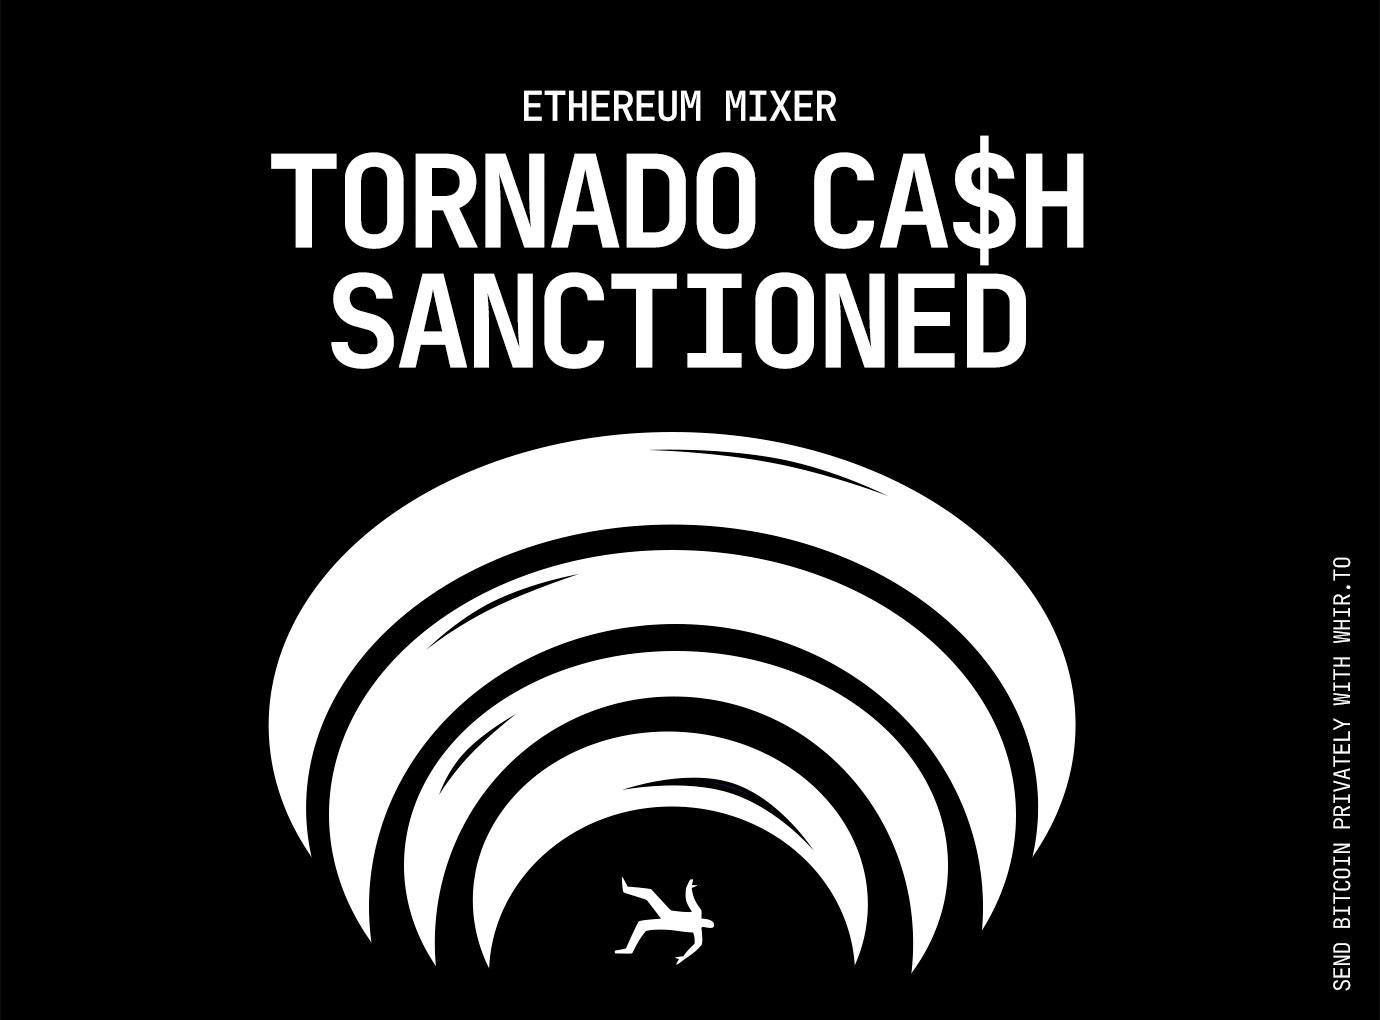 Ethereum-Mixer Tornado sanktioniert